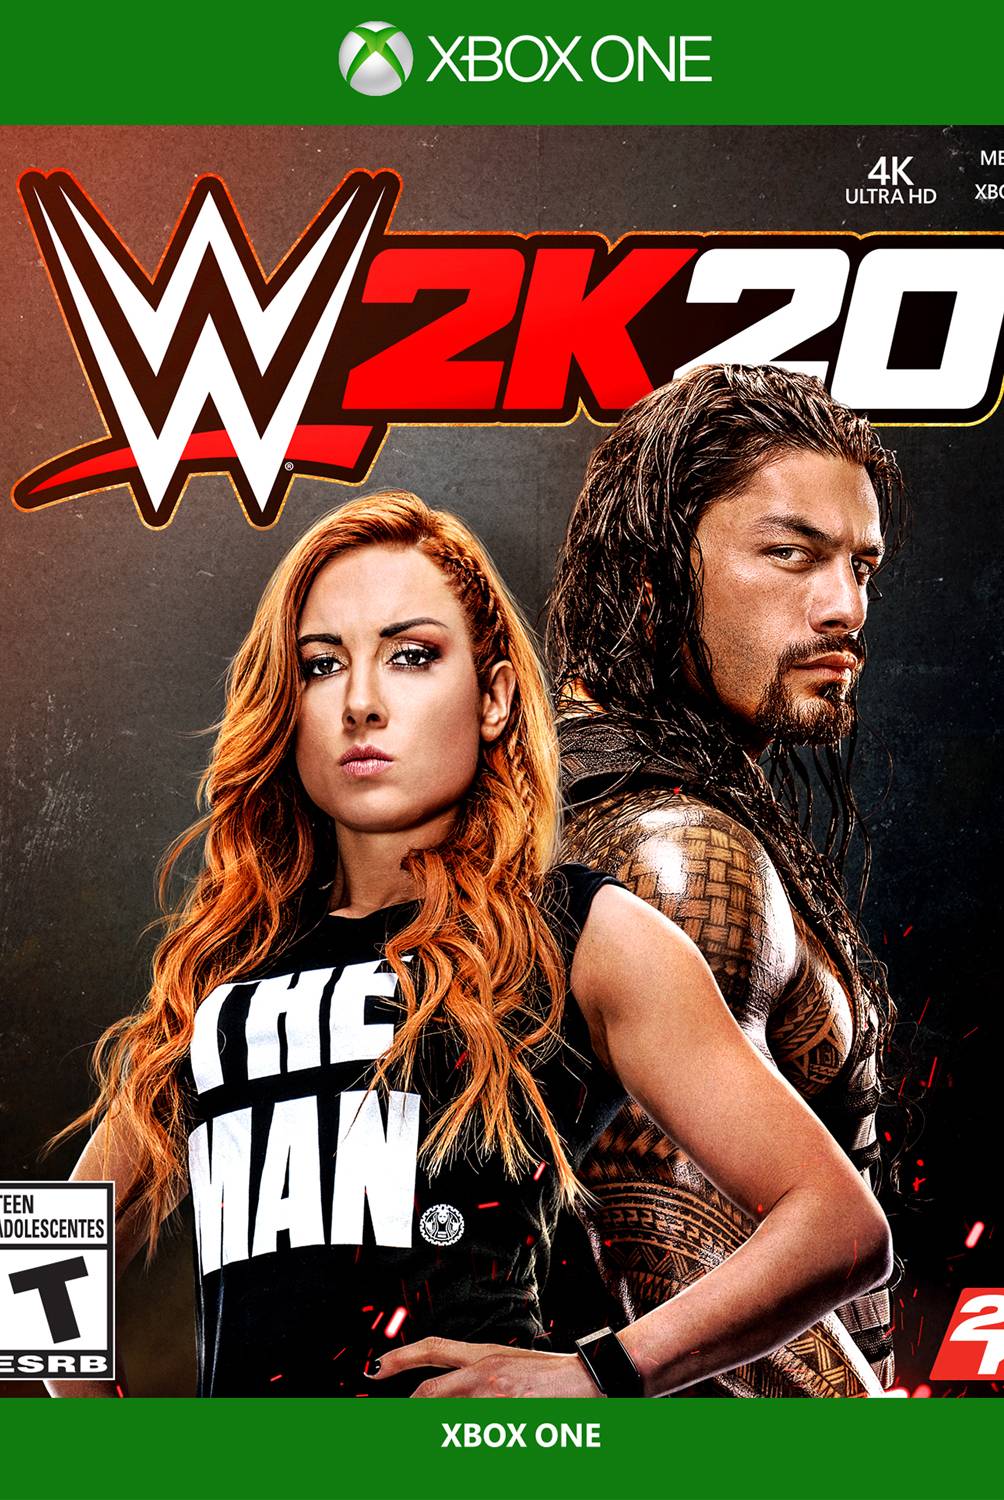 ELECTRONIC ARTS - Videojuego WWE 2k20 Video Juego Consola Xbox One